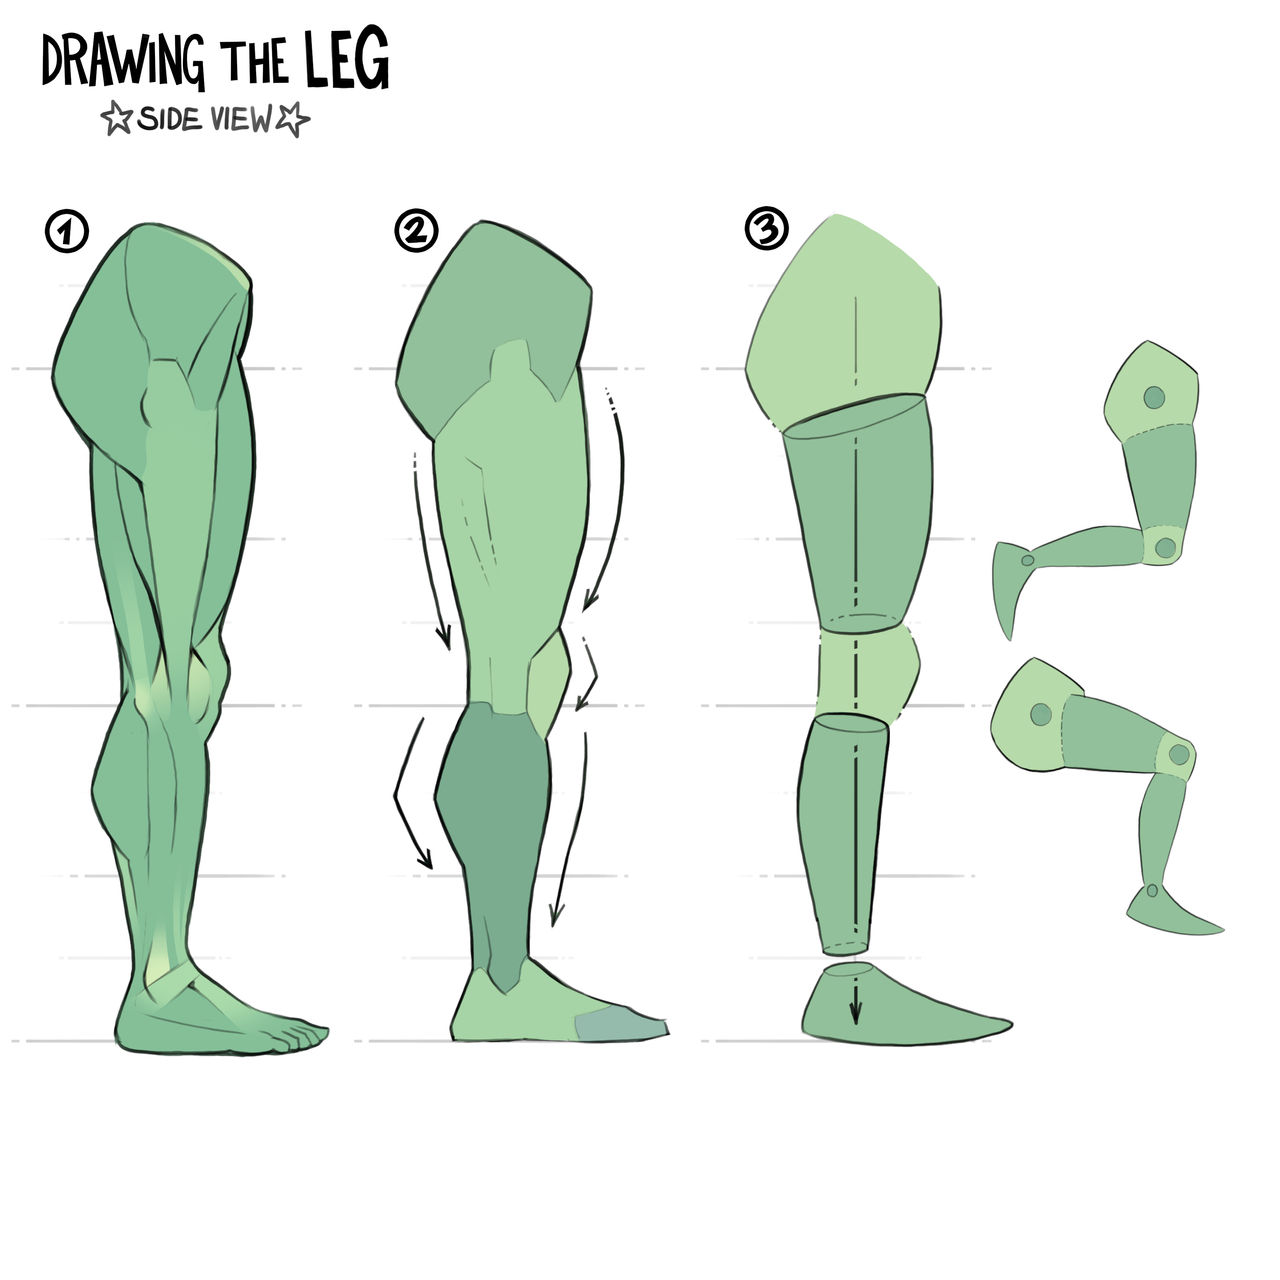 Sideview of the Leg by gregor-kari on DeviantArt